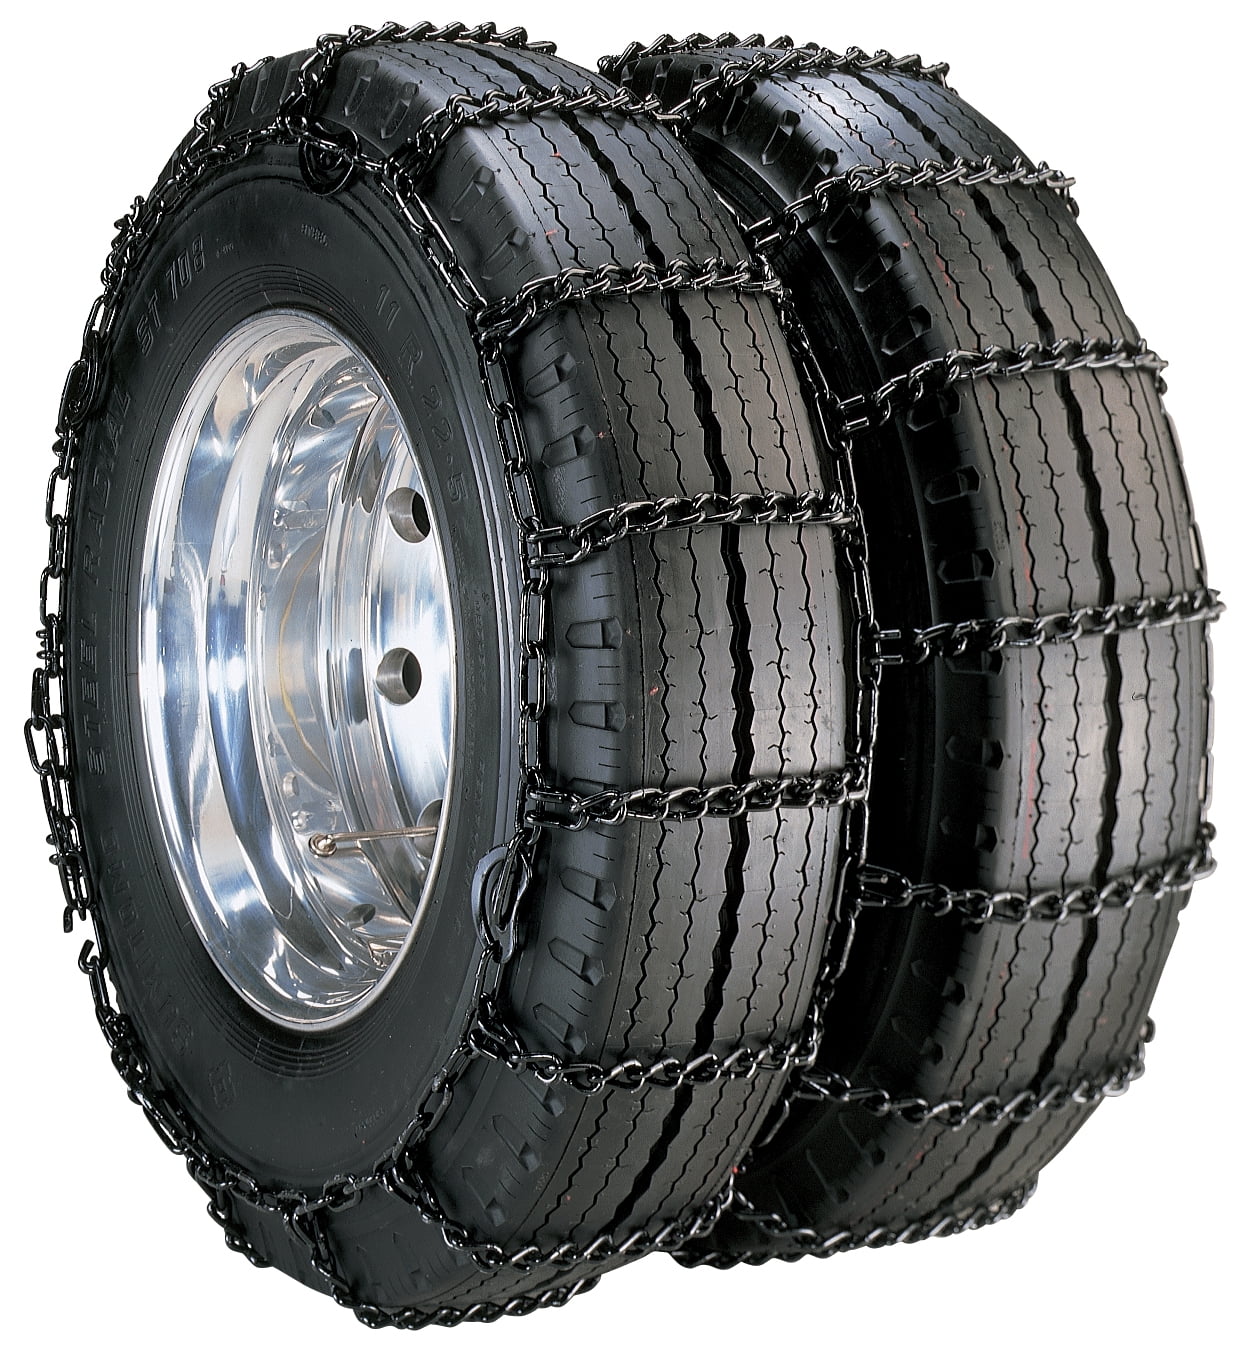 Customer Return Skid Steer Uni-loader Snow Tire Chains Hardened 10-16.5 Peerless for sale online 